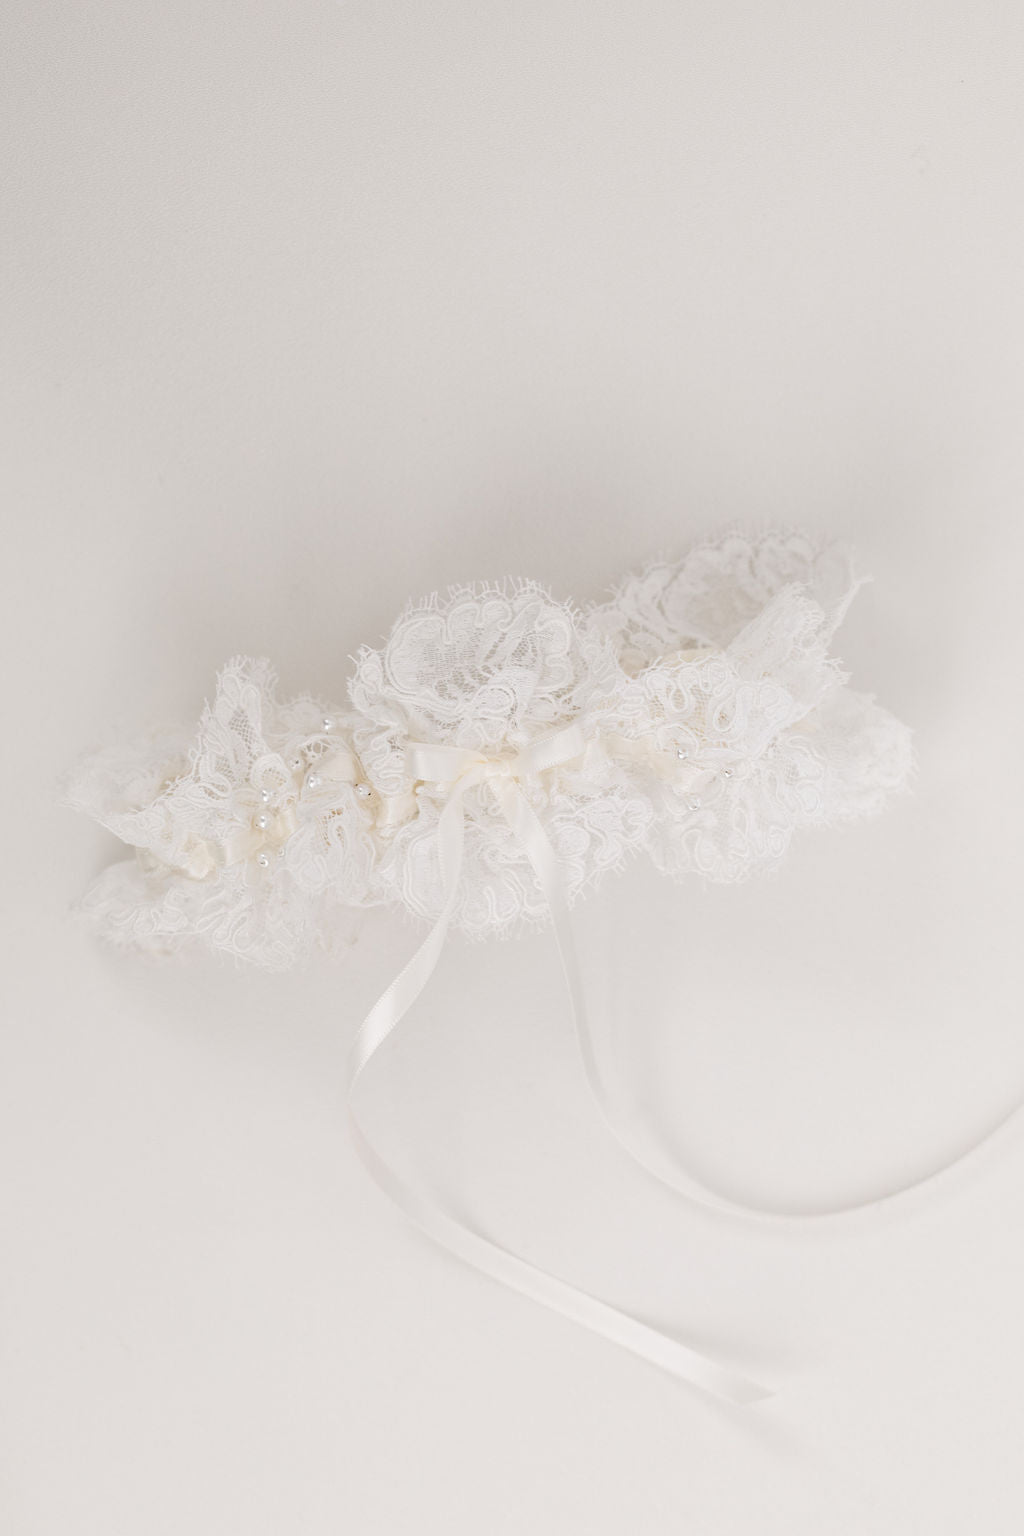 heirloom wedding garter hand made from the bride's mother's wedding dress by The Garter Girl